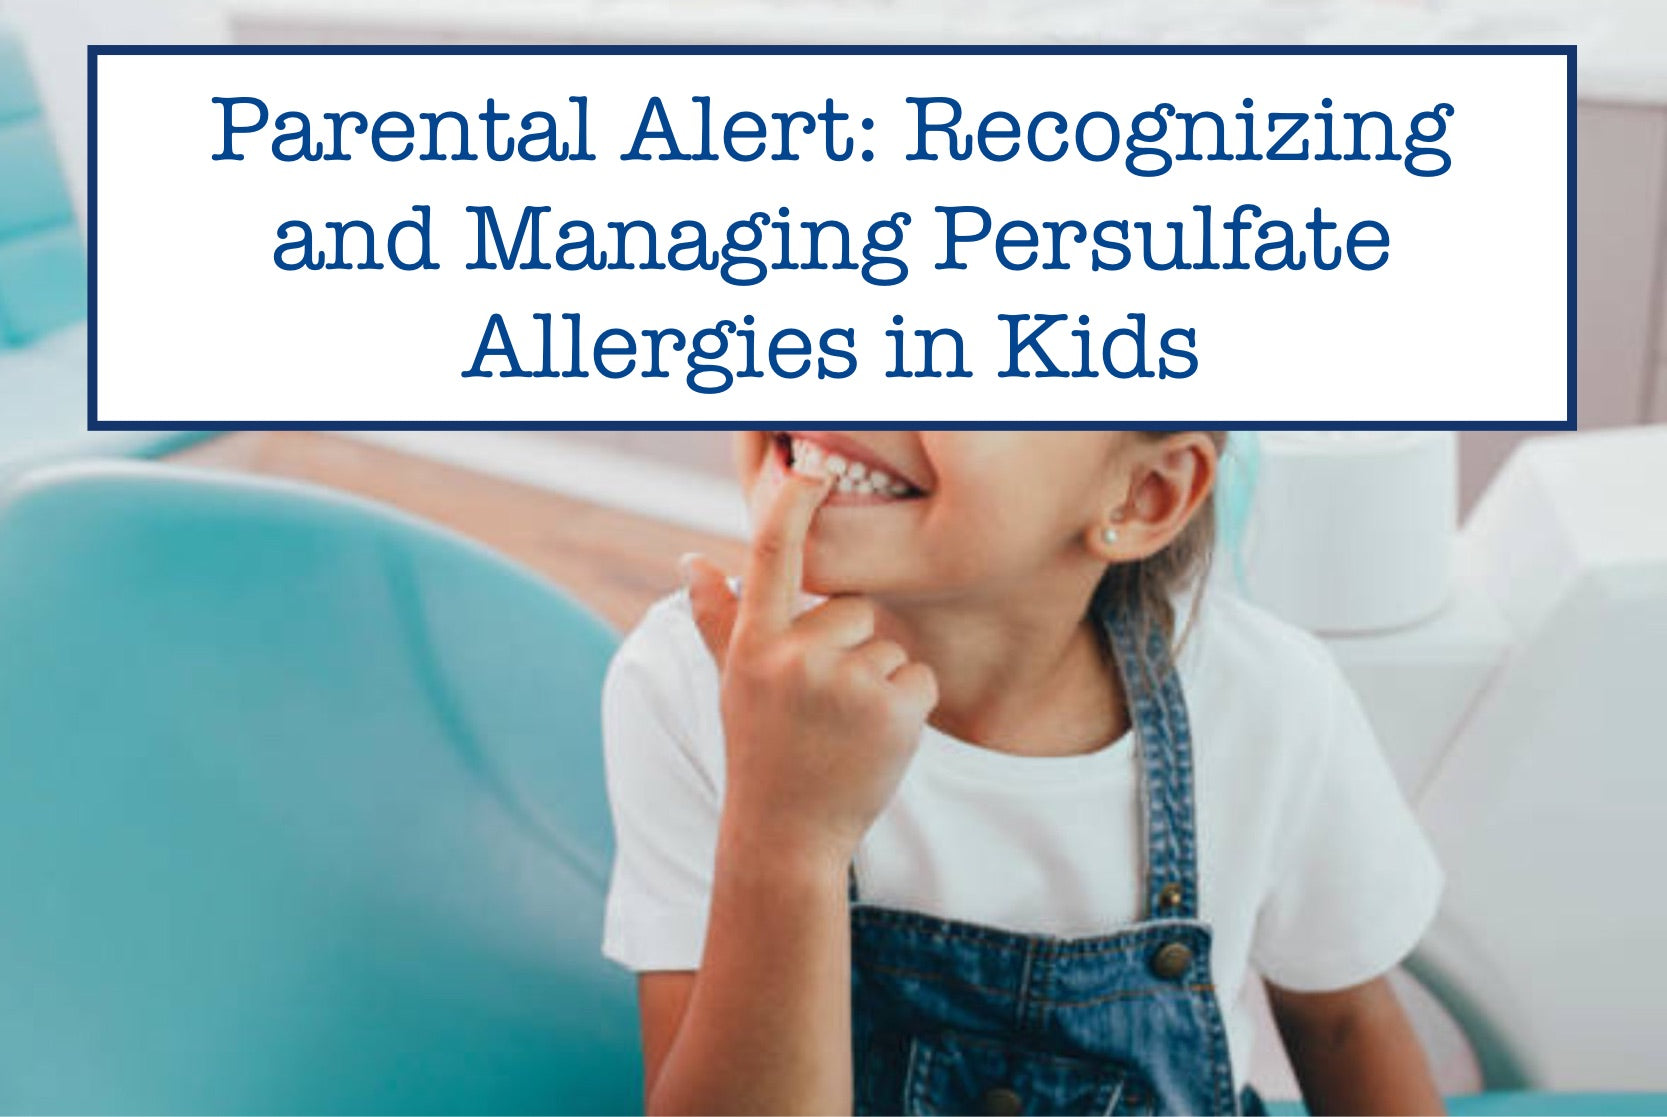 Parental Alert: Recognizing and Managing Persulfate Allergies in Kids